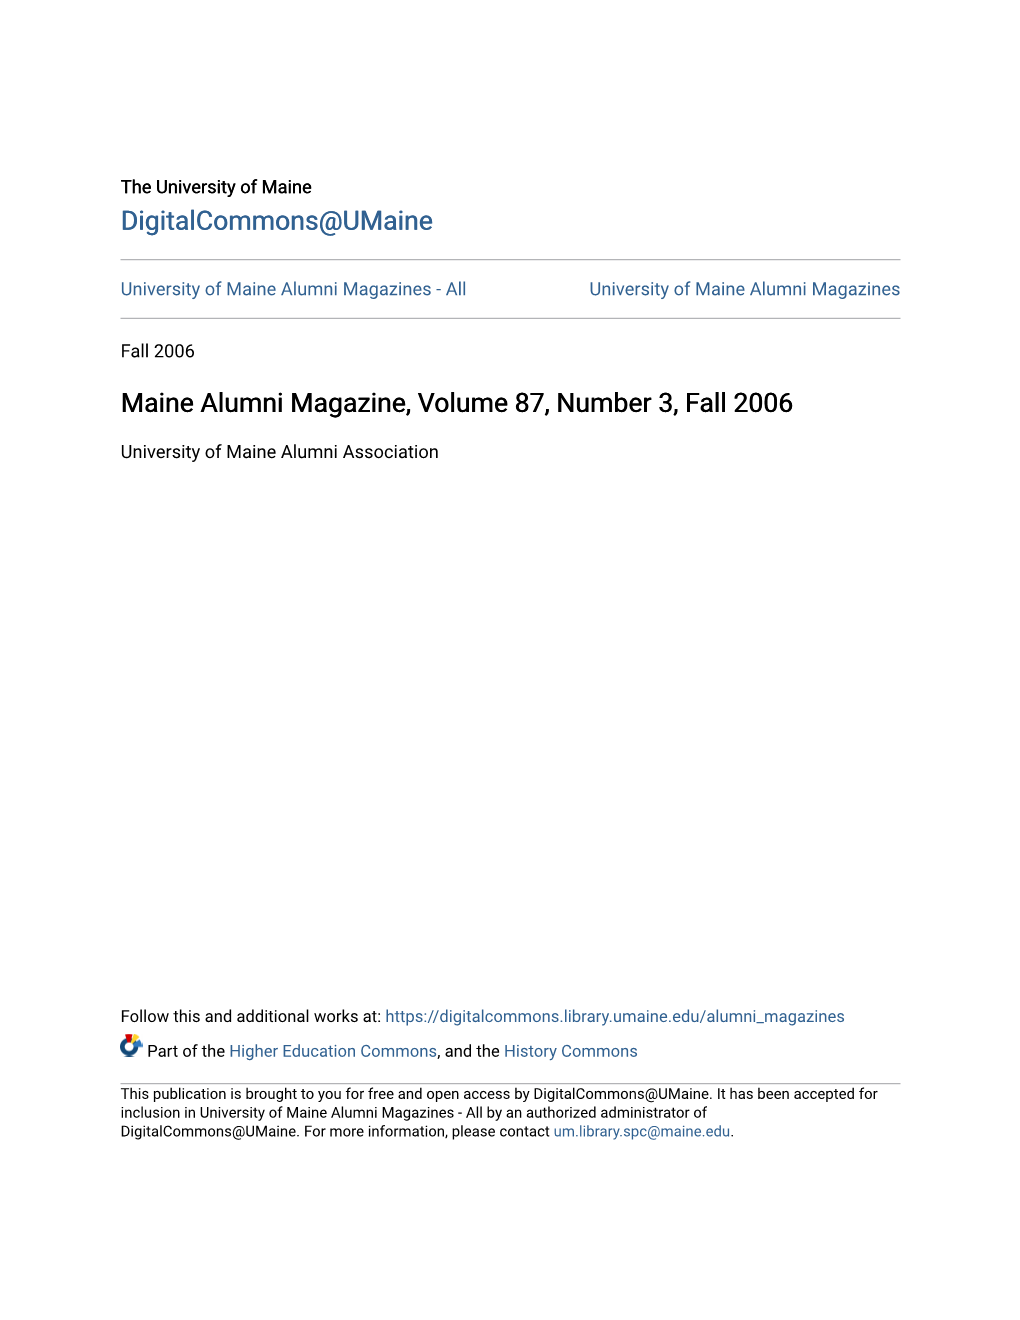 Maine Alumni Magazine, Volume 87, Number 3, Fall 2006